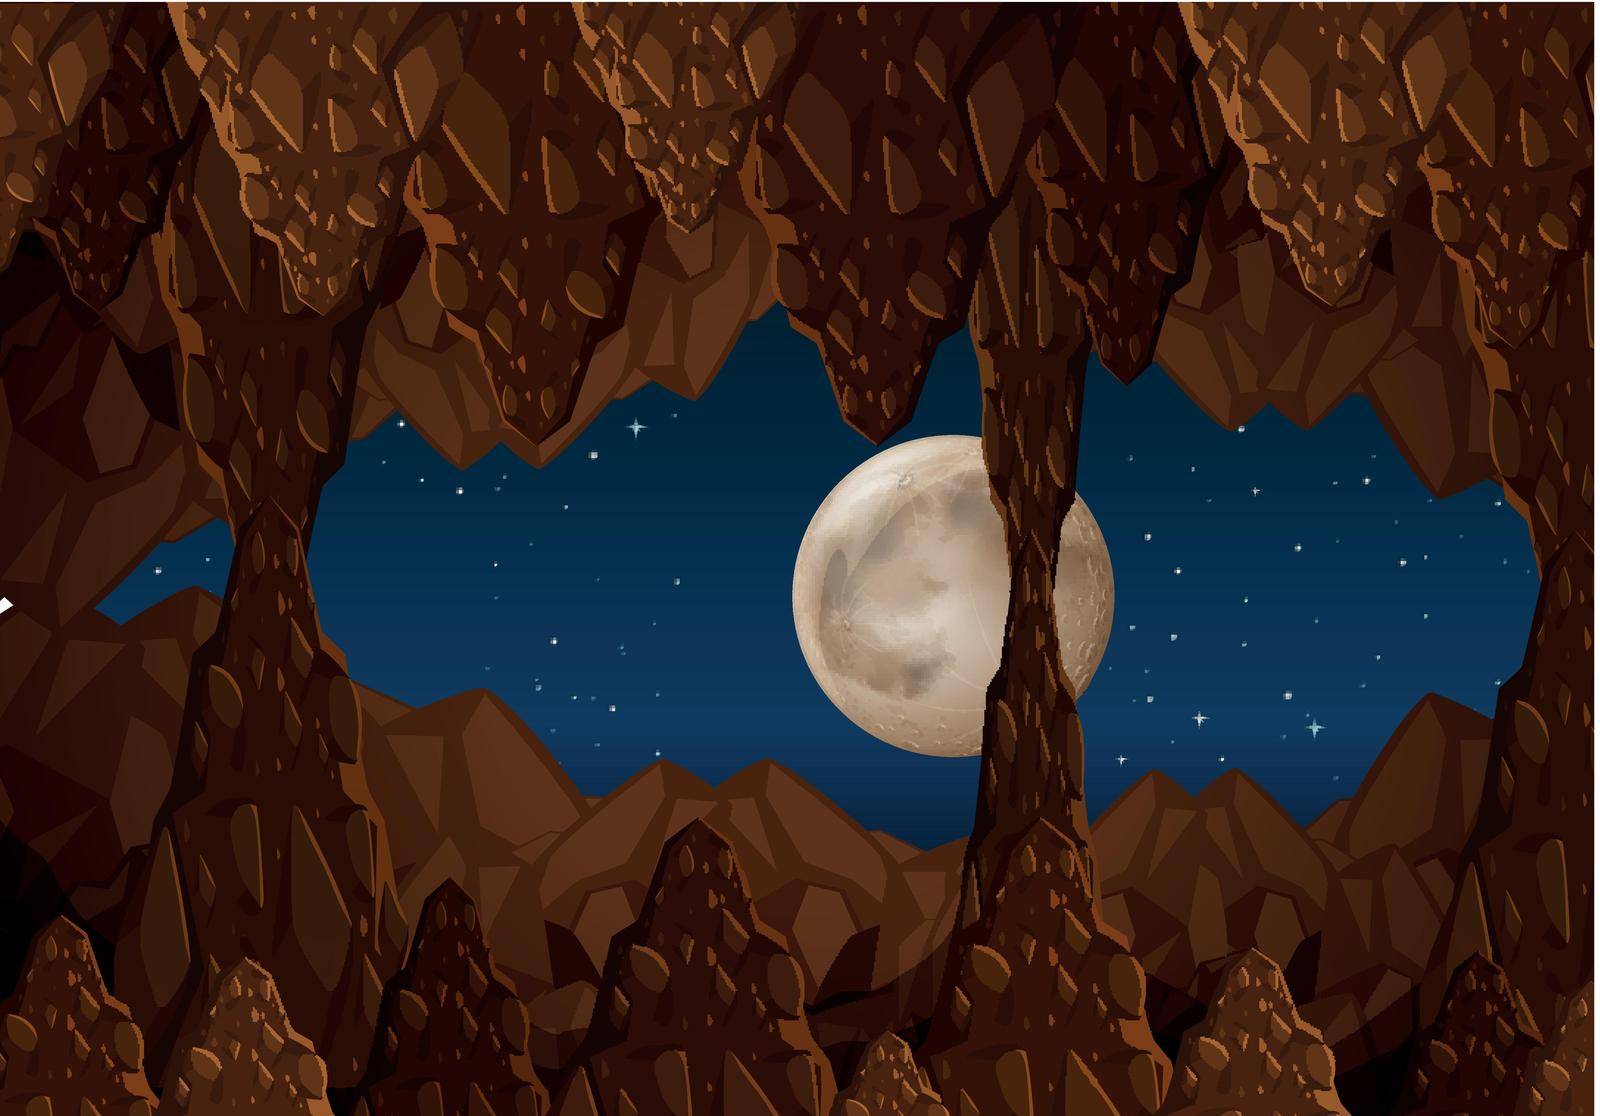 A cave at night landscape illustration